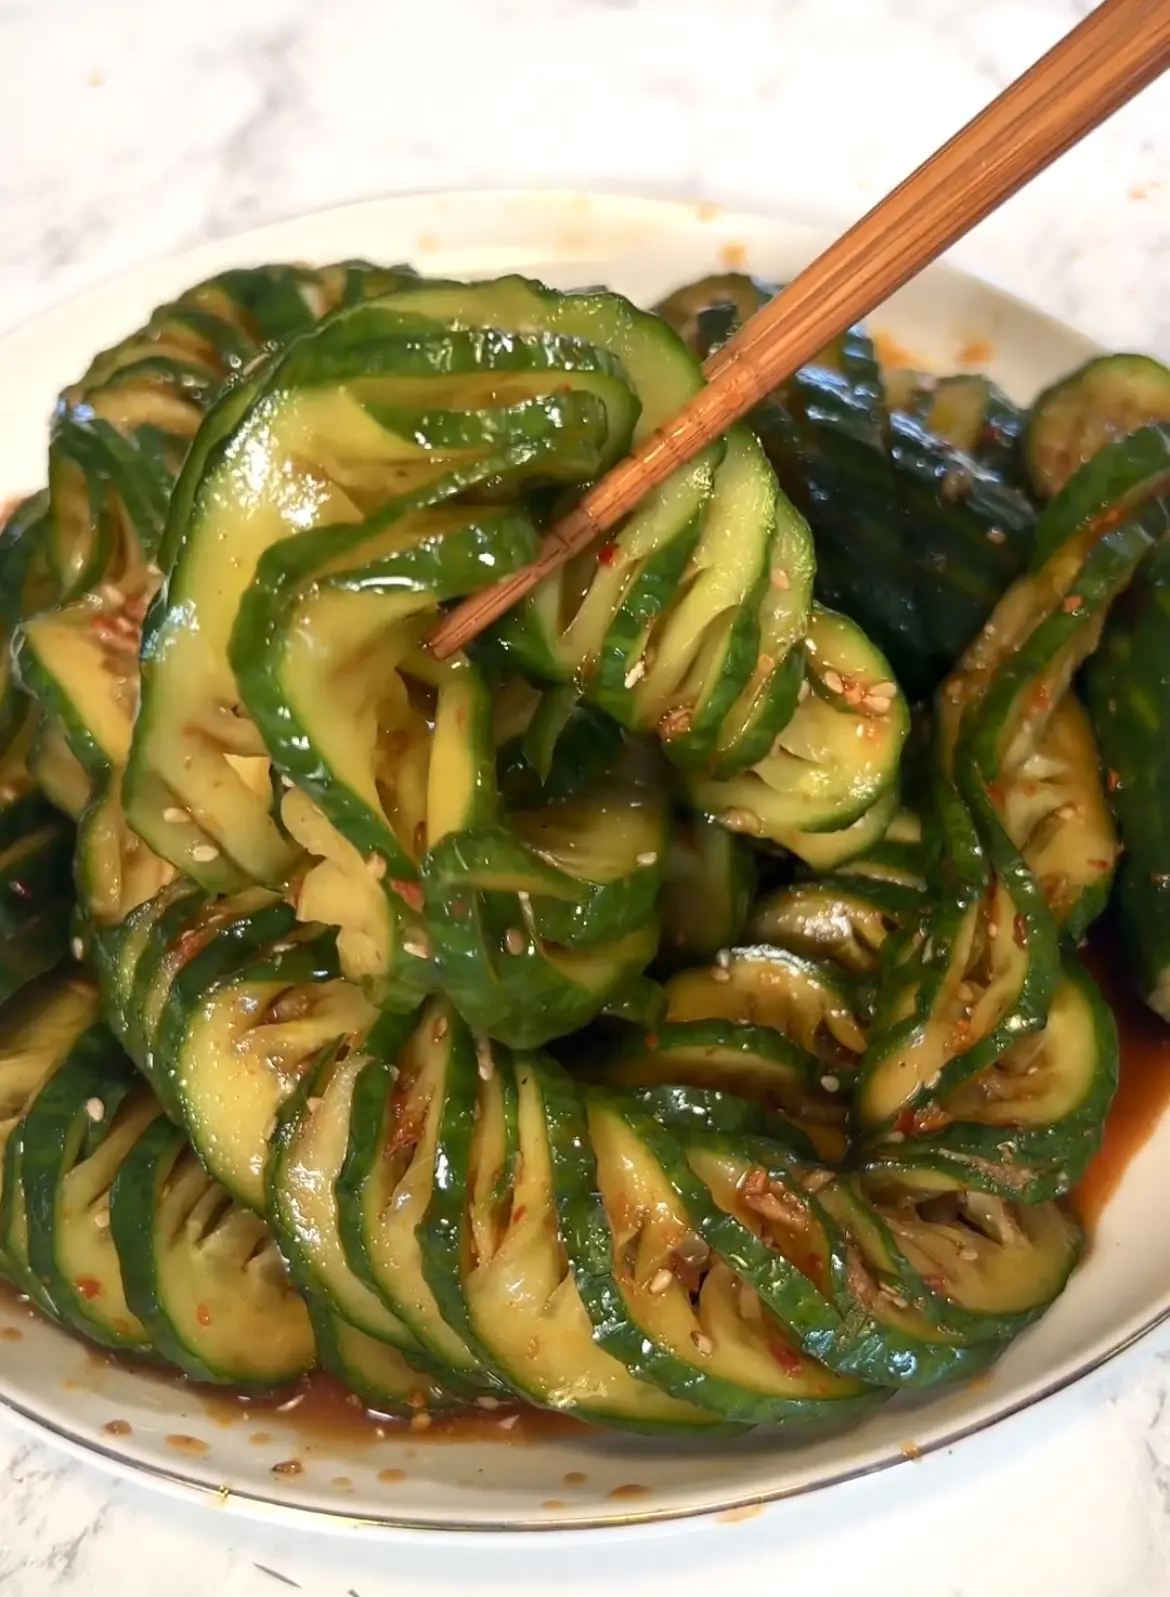 Vegan Spicy Asian-Style Cucumber Salad